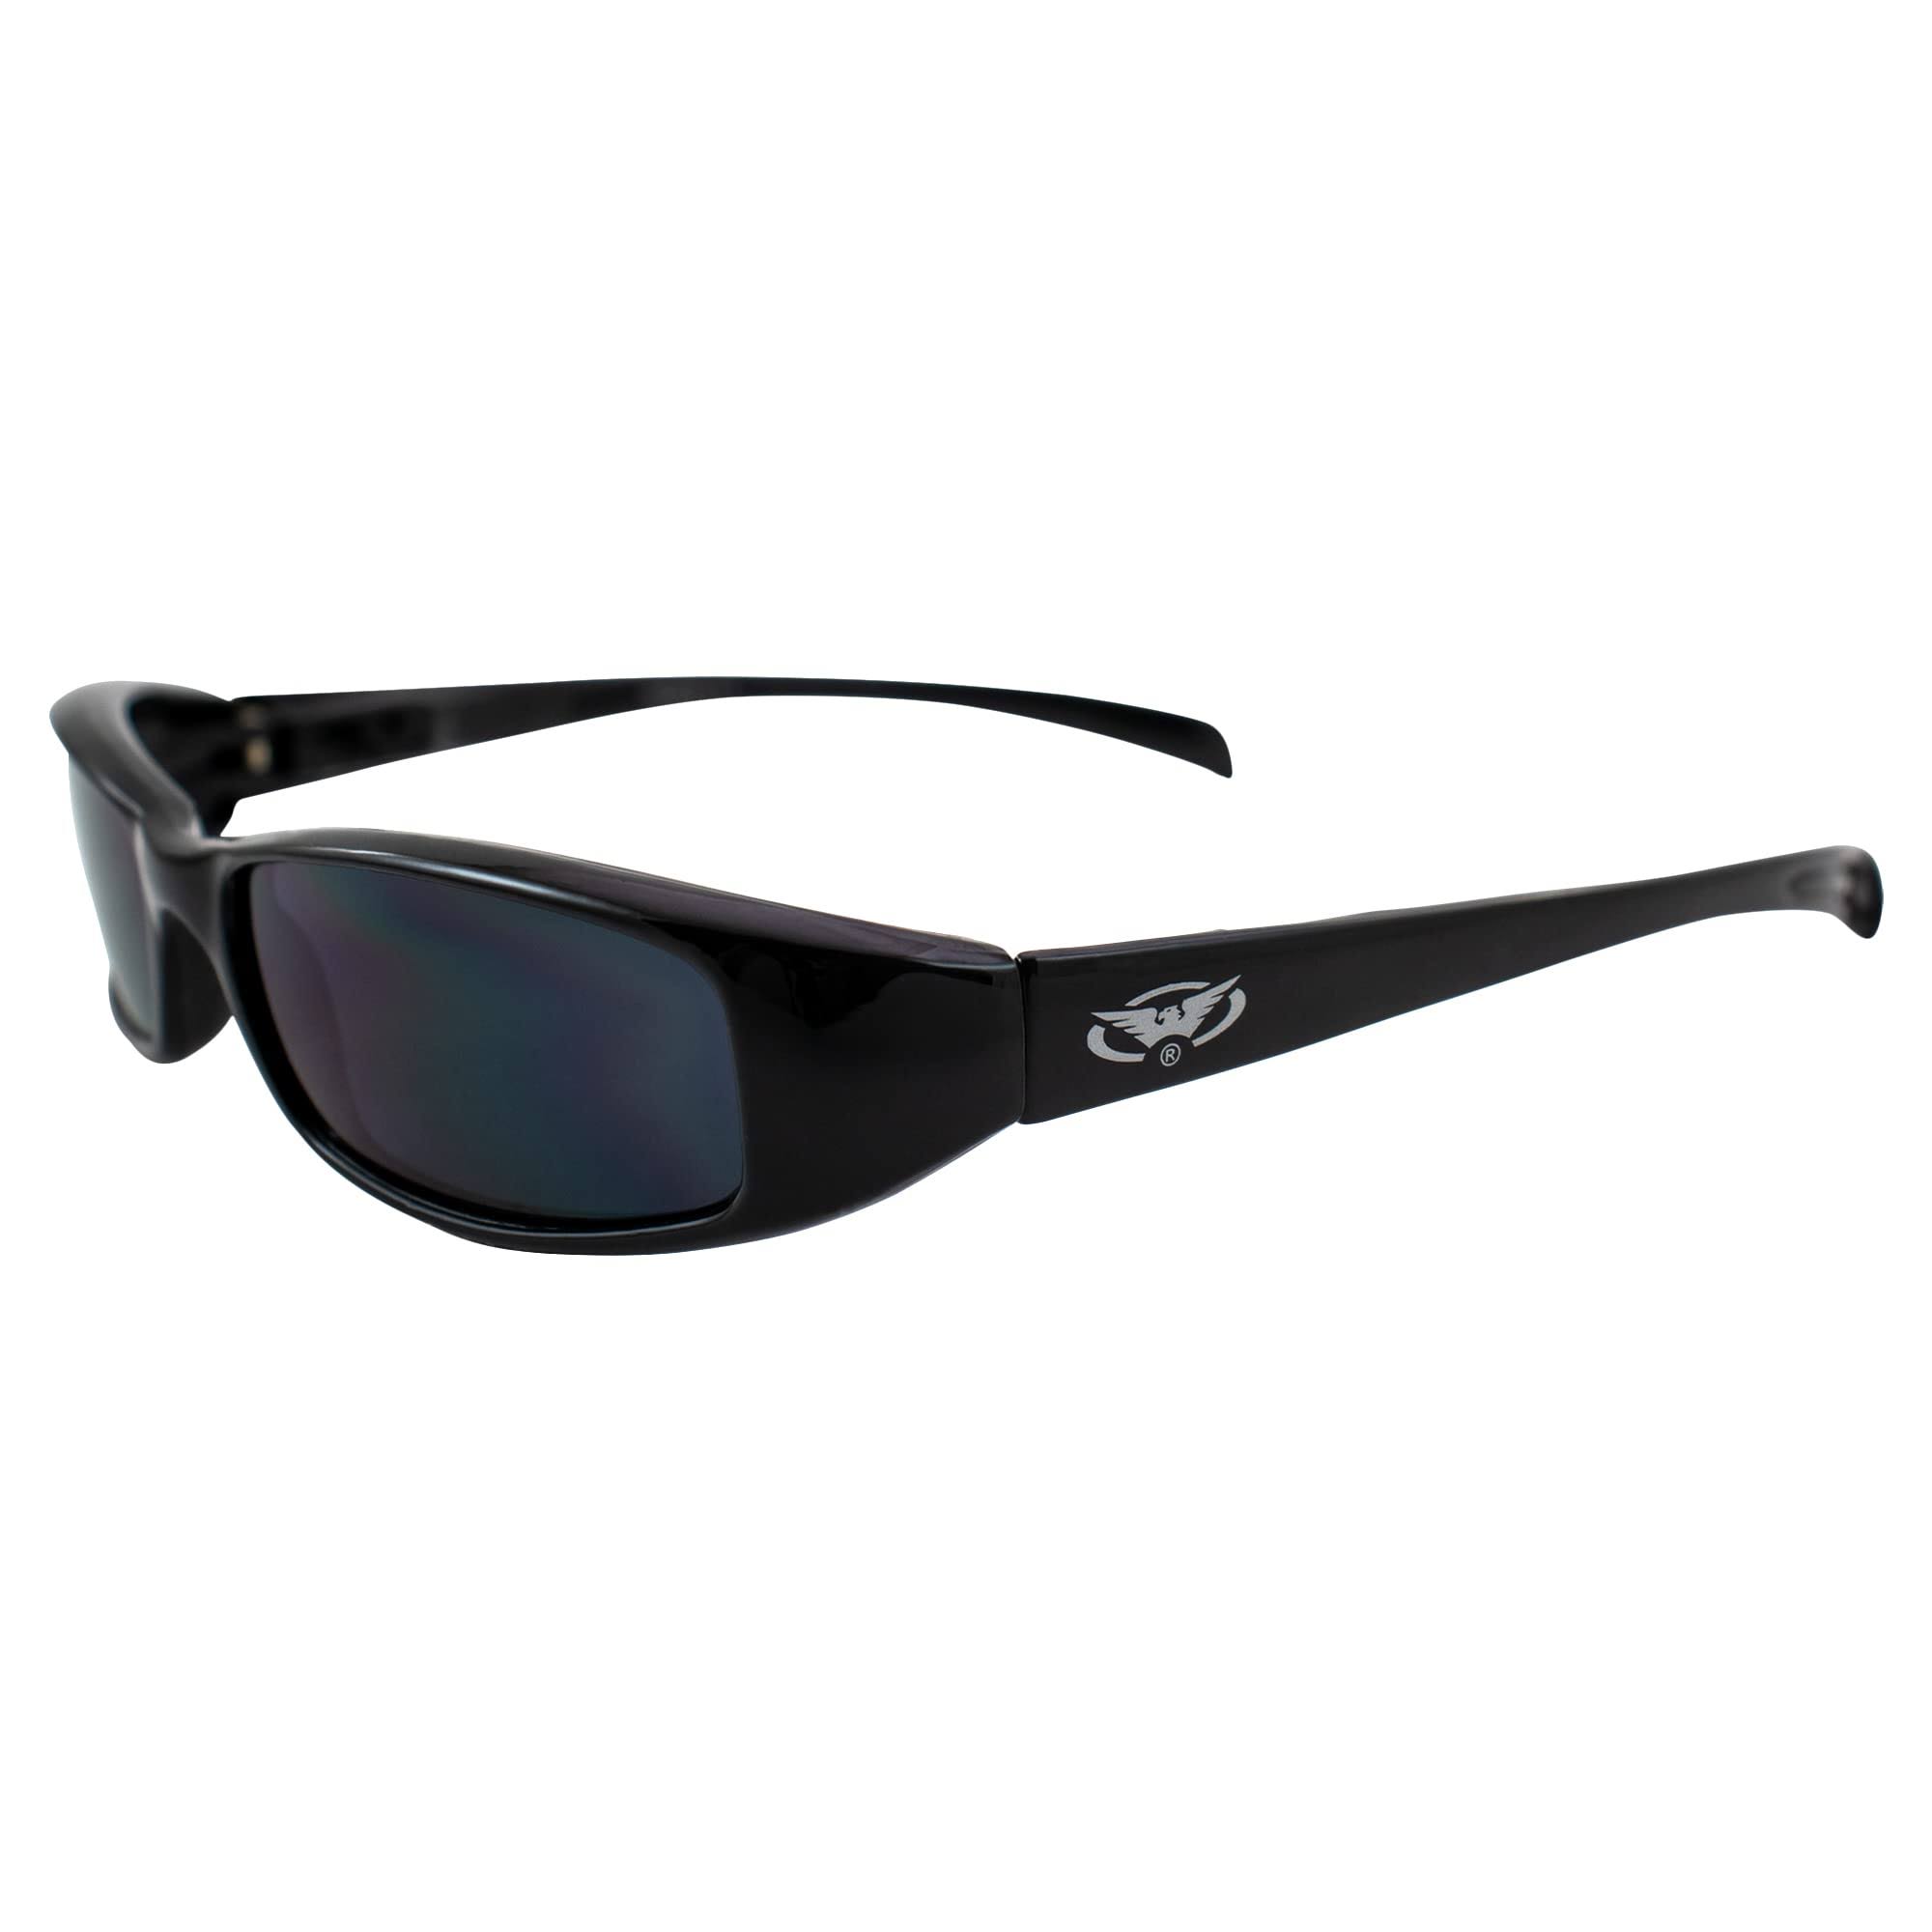 Global Vision Eyewear New Attitude Sunglasses - Super Dark Lenses